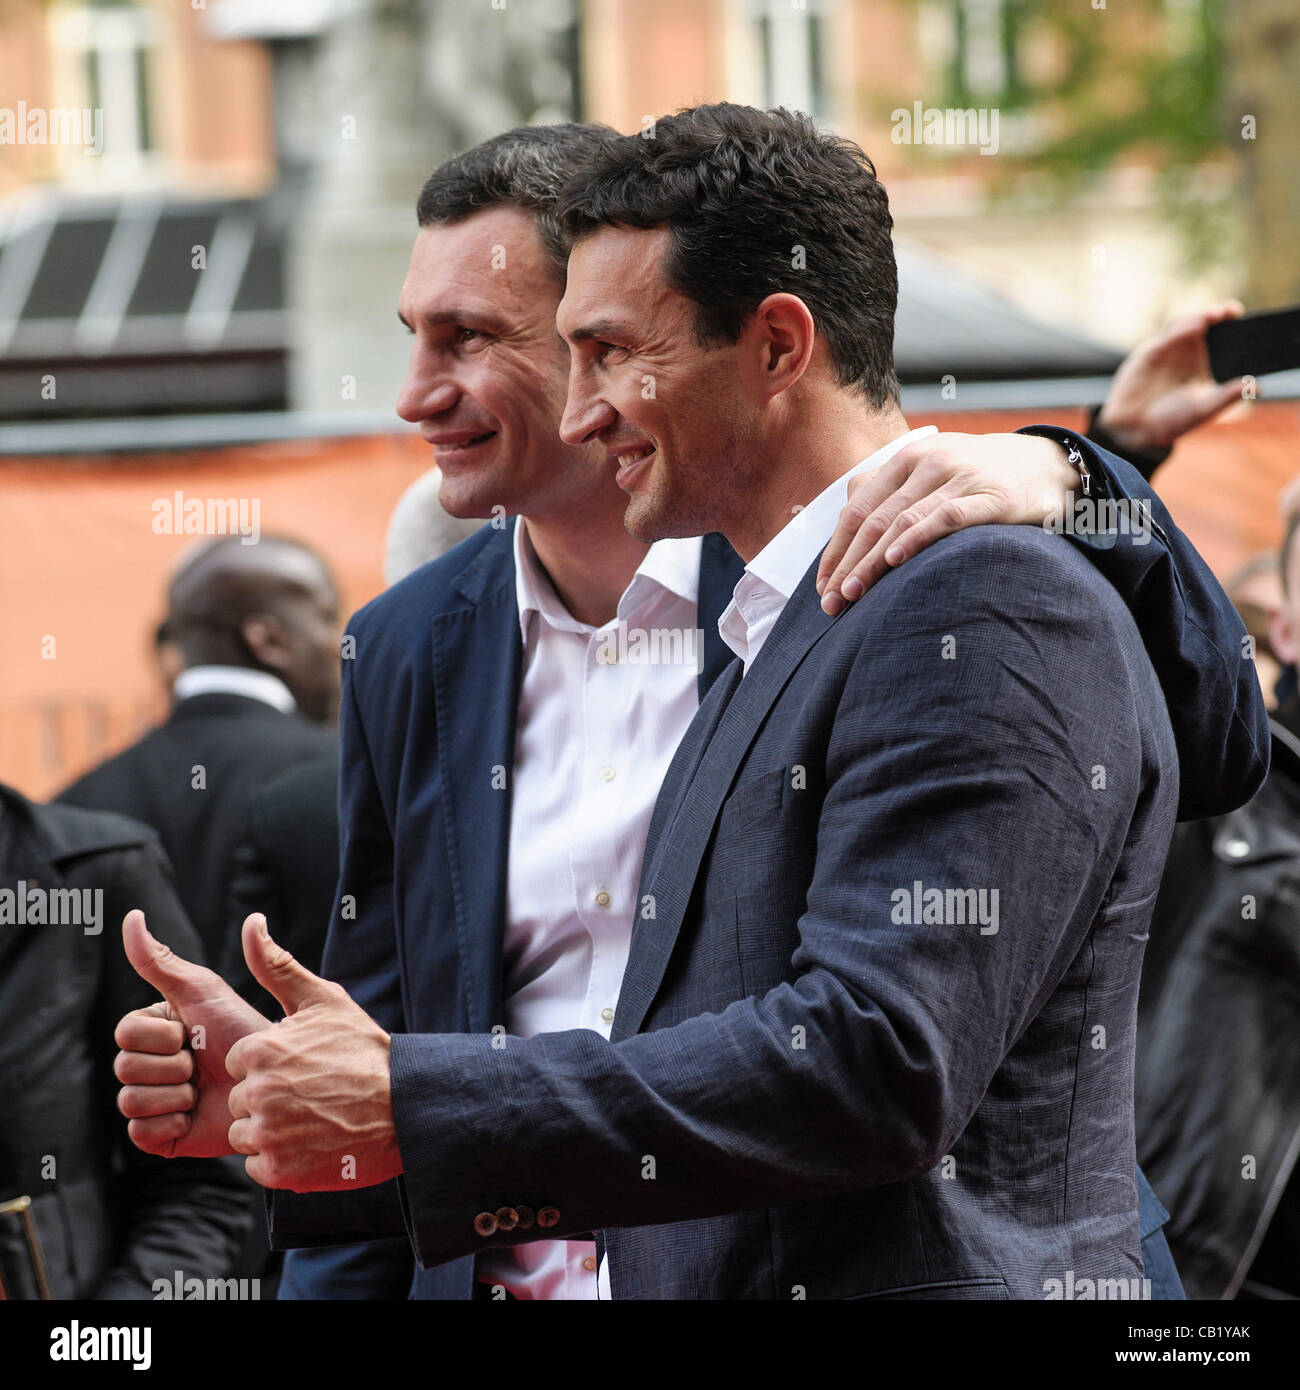 London, UK. KLITSCHKO-UK-Premiere im Empire Leicester Square am 21. Mai 2012. Personen im Bild: Wladimir Klitschko und Vitali Klitschko. Bild von Julie Edwards Stockfoto